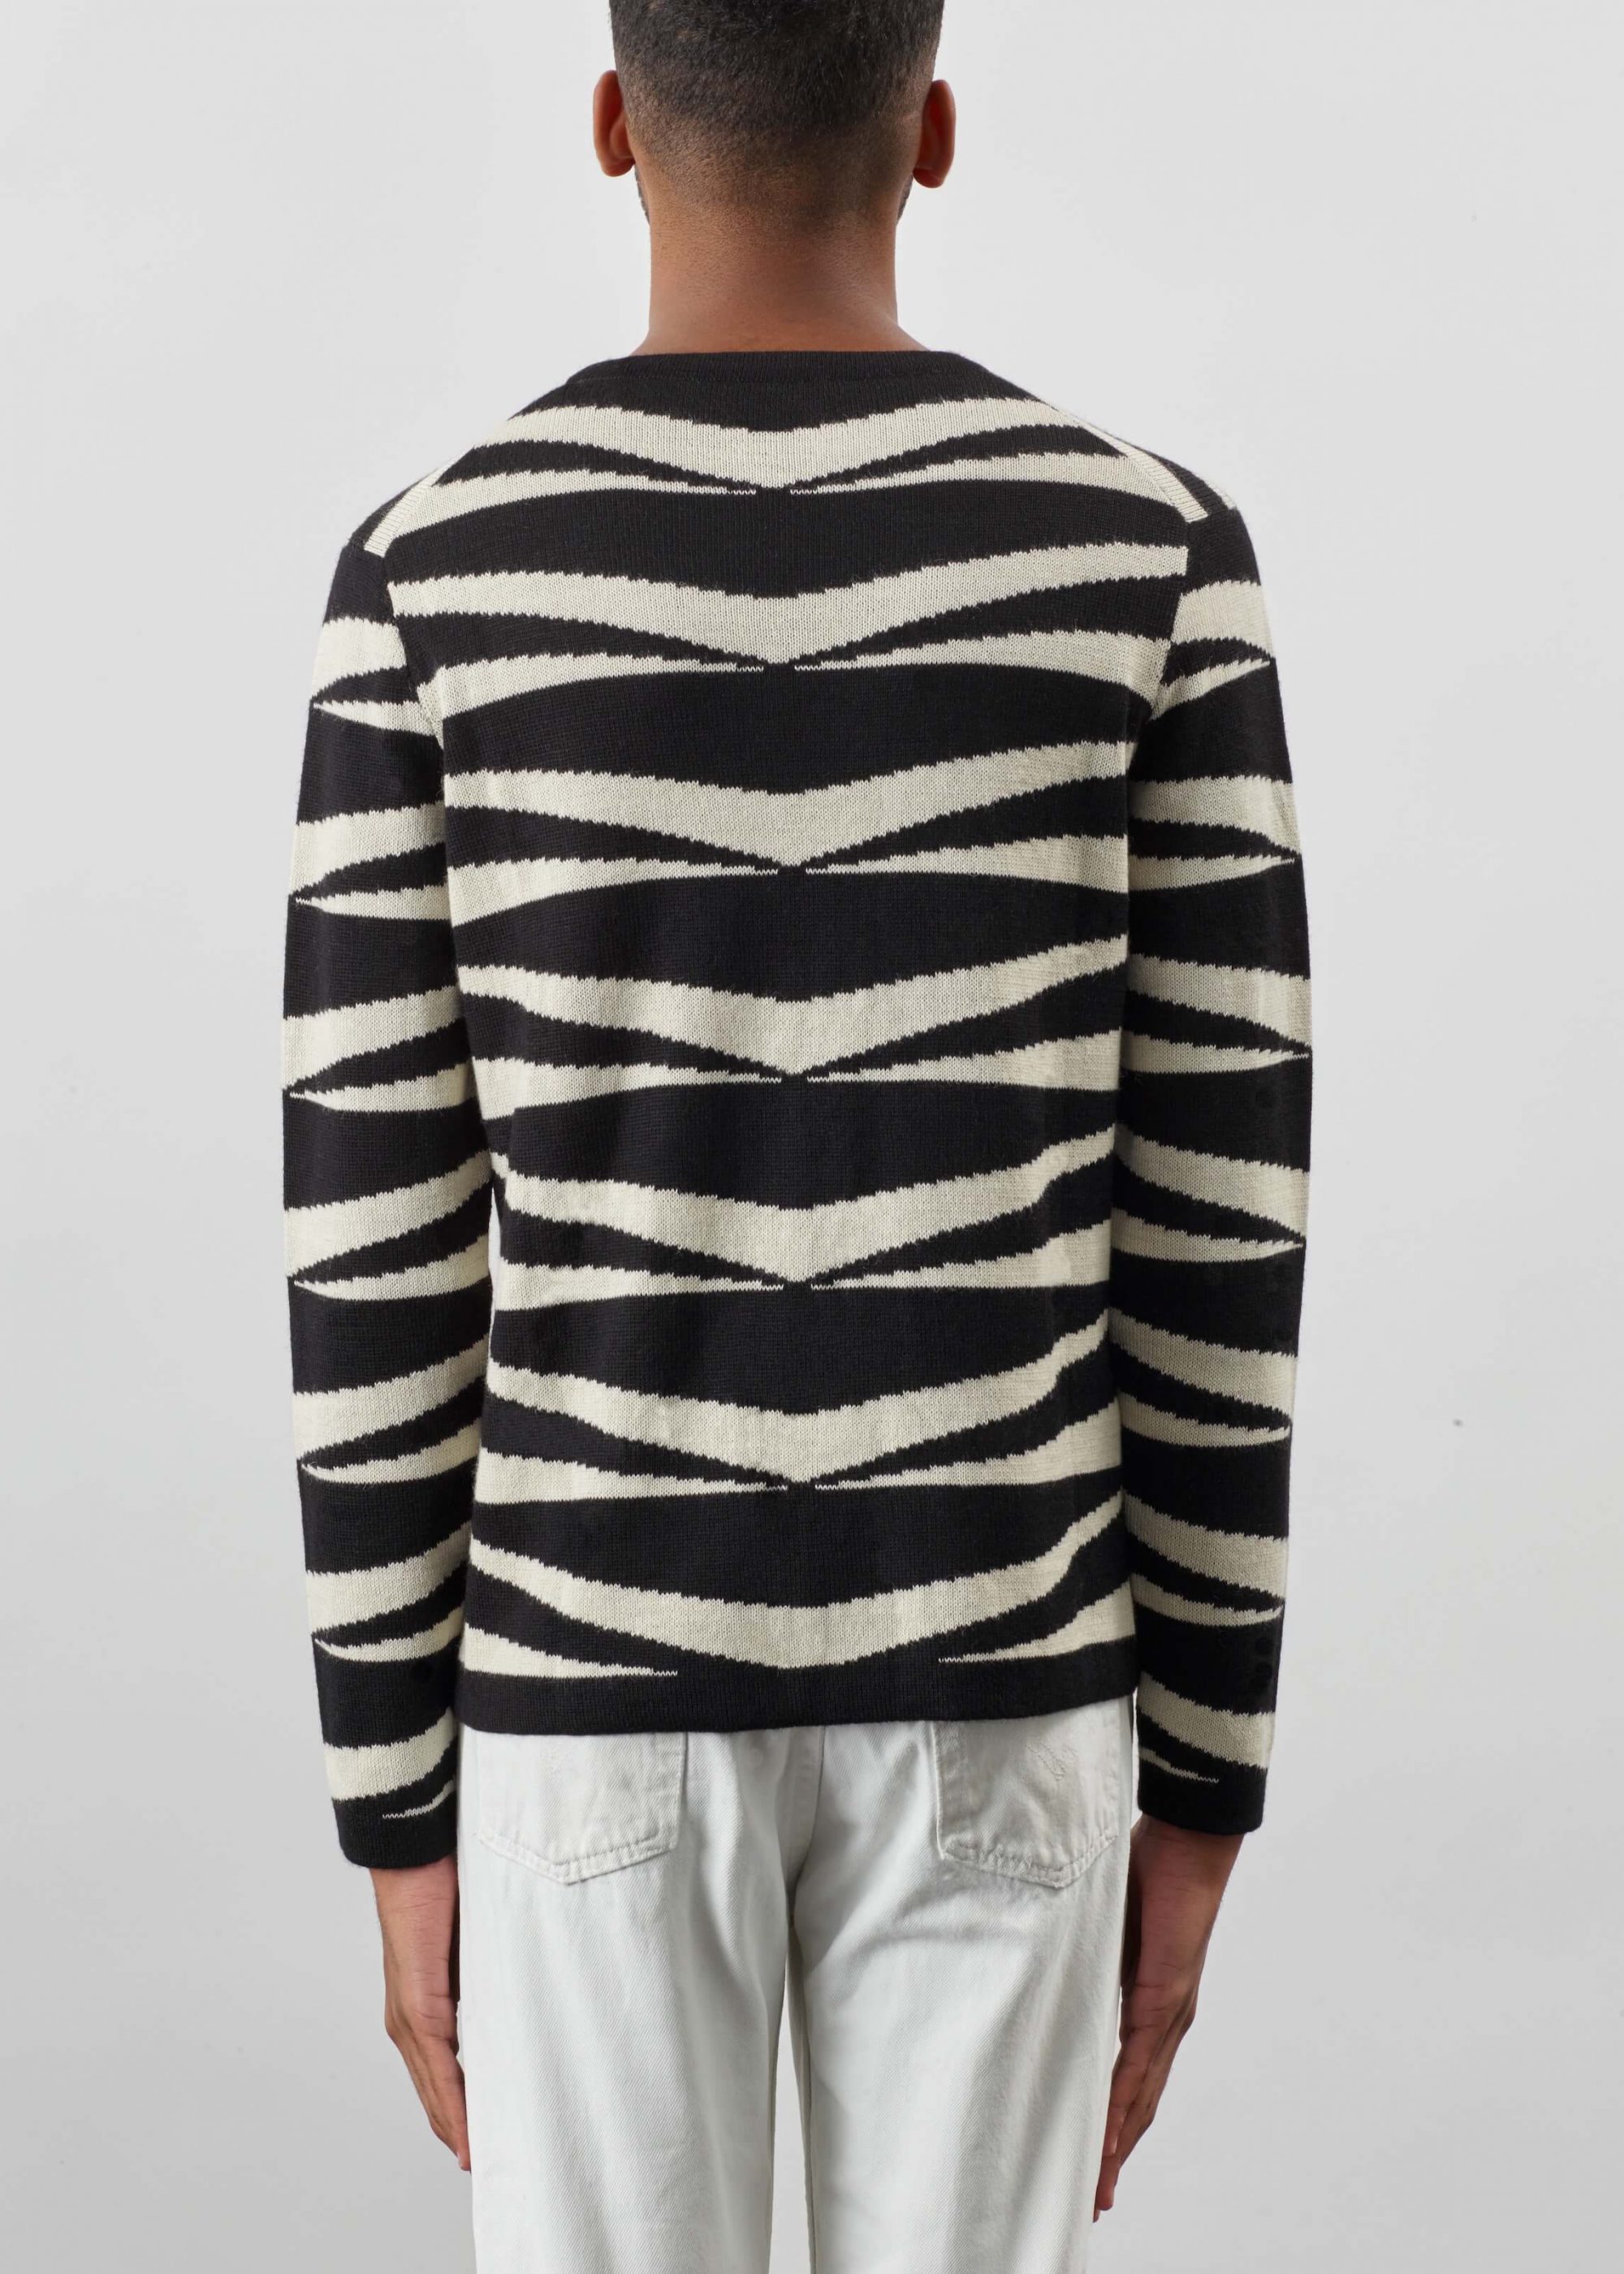 Product image for »Tao« Jacquard Sweater Baby Alpaca | Black Ecru